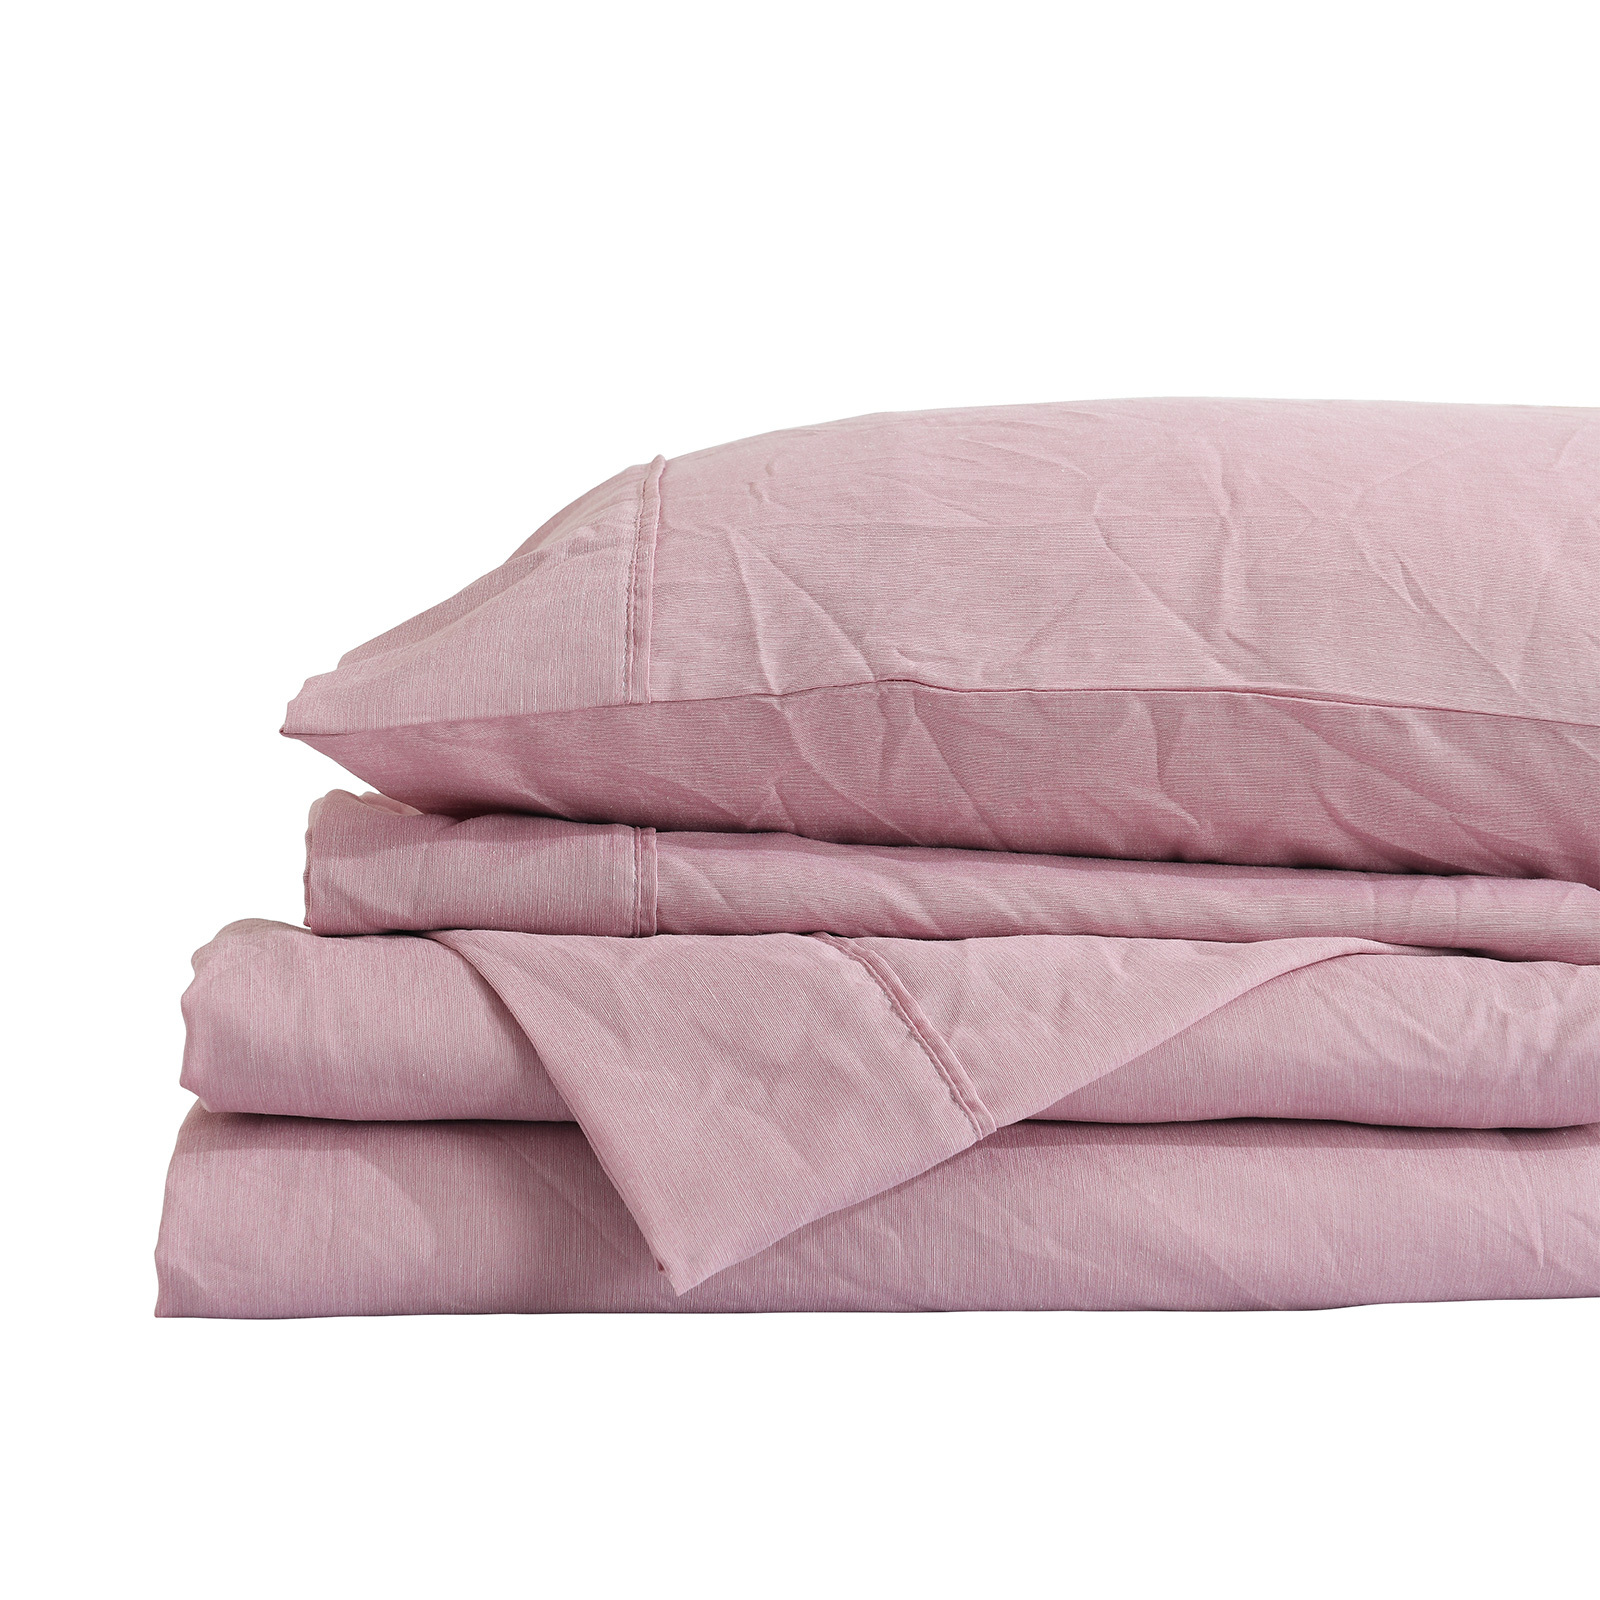 Royal Comfort Flax Linen Blend Sheet Set Bedding Luxury Breathable ...